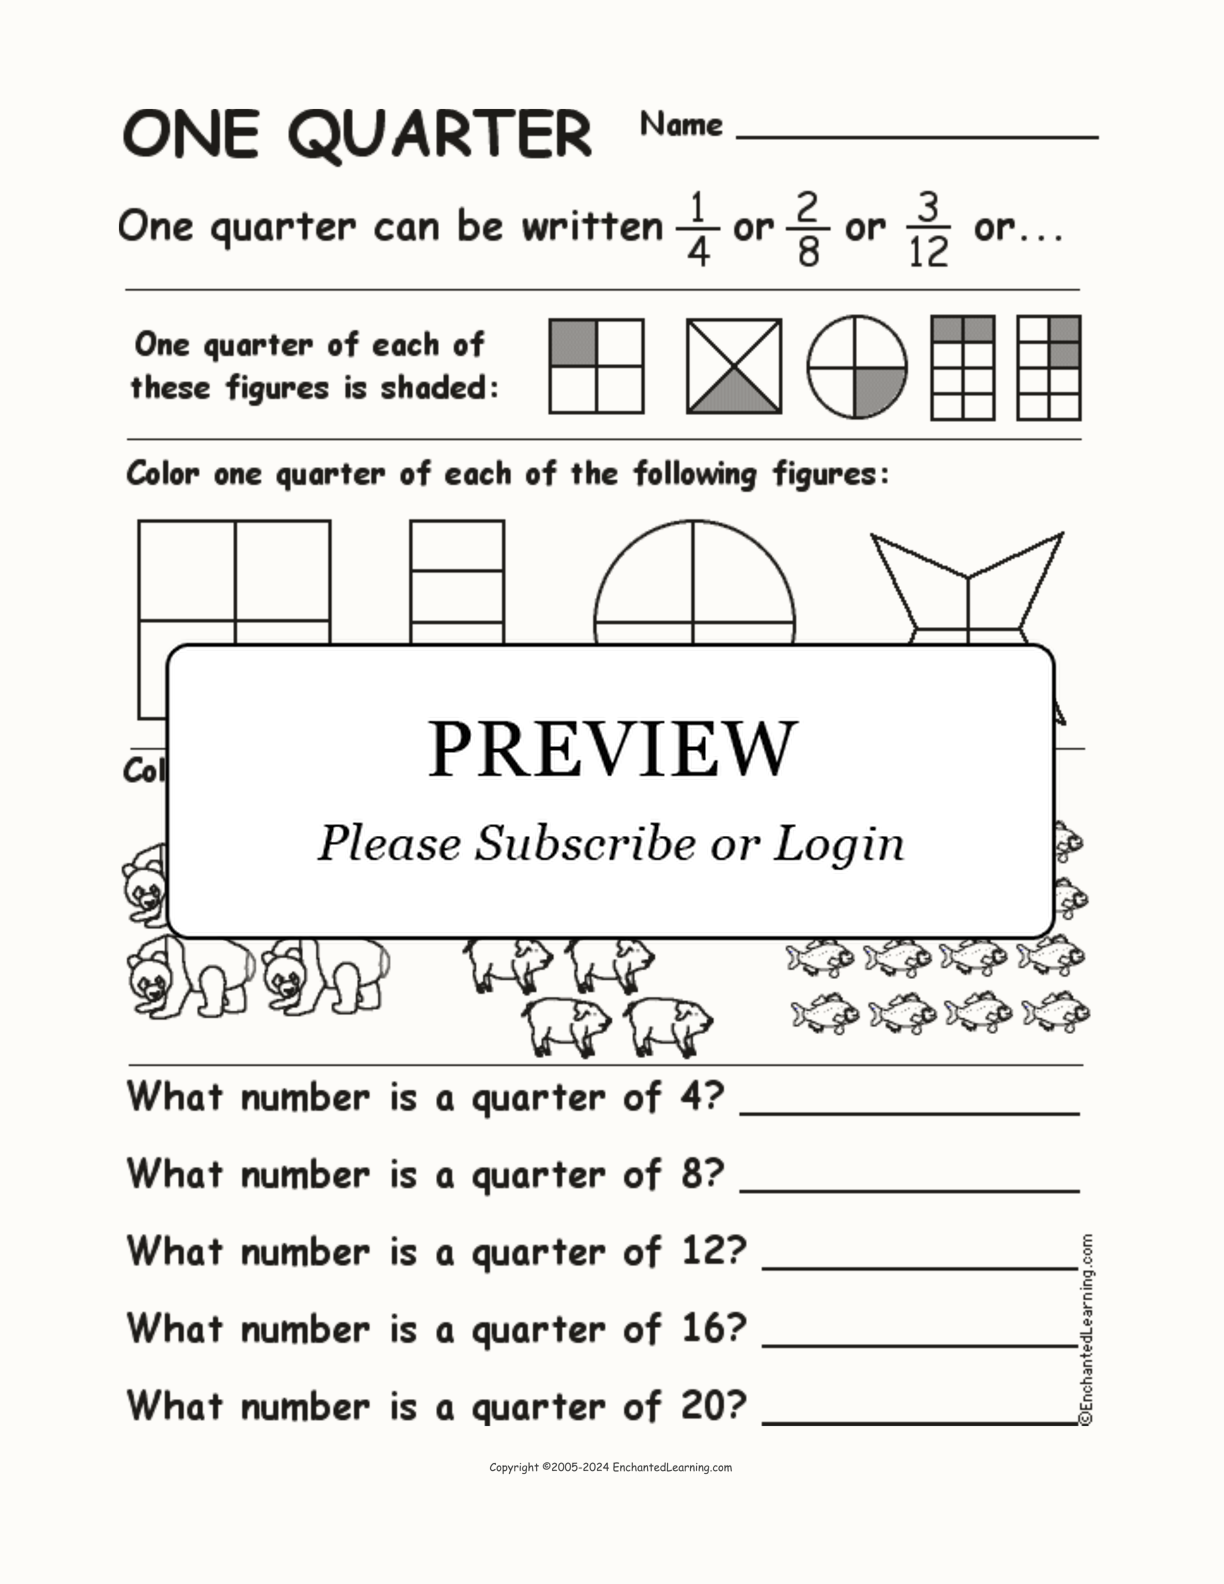 One Quarter Fractions Worksheet interactive worksheet page 1